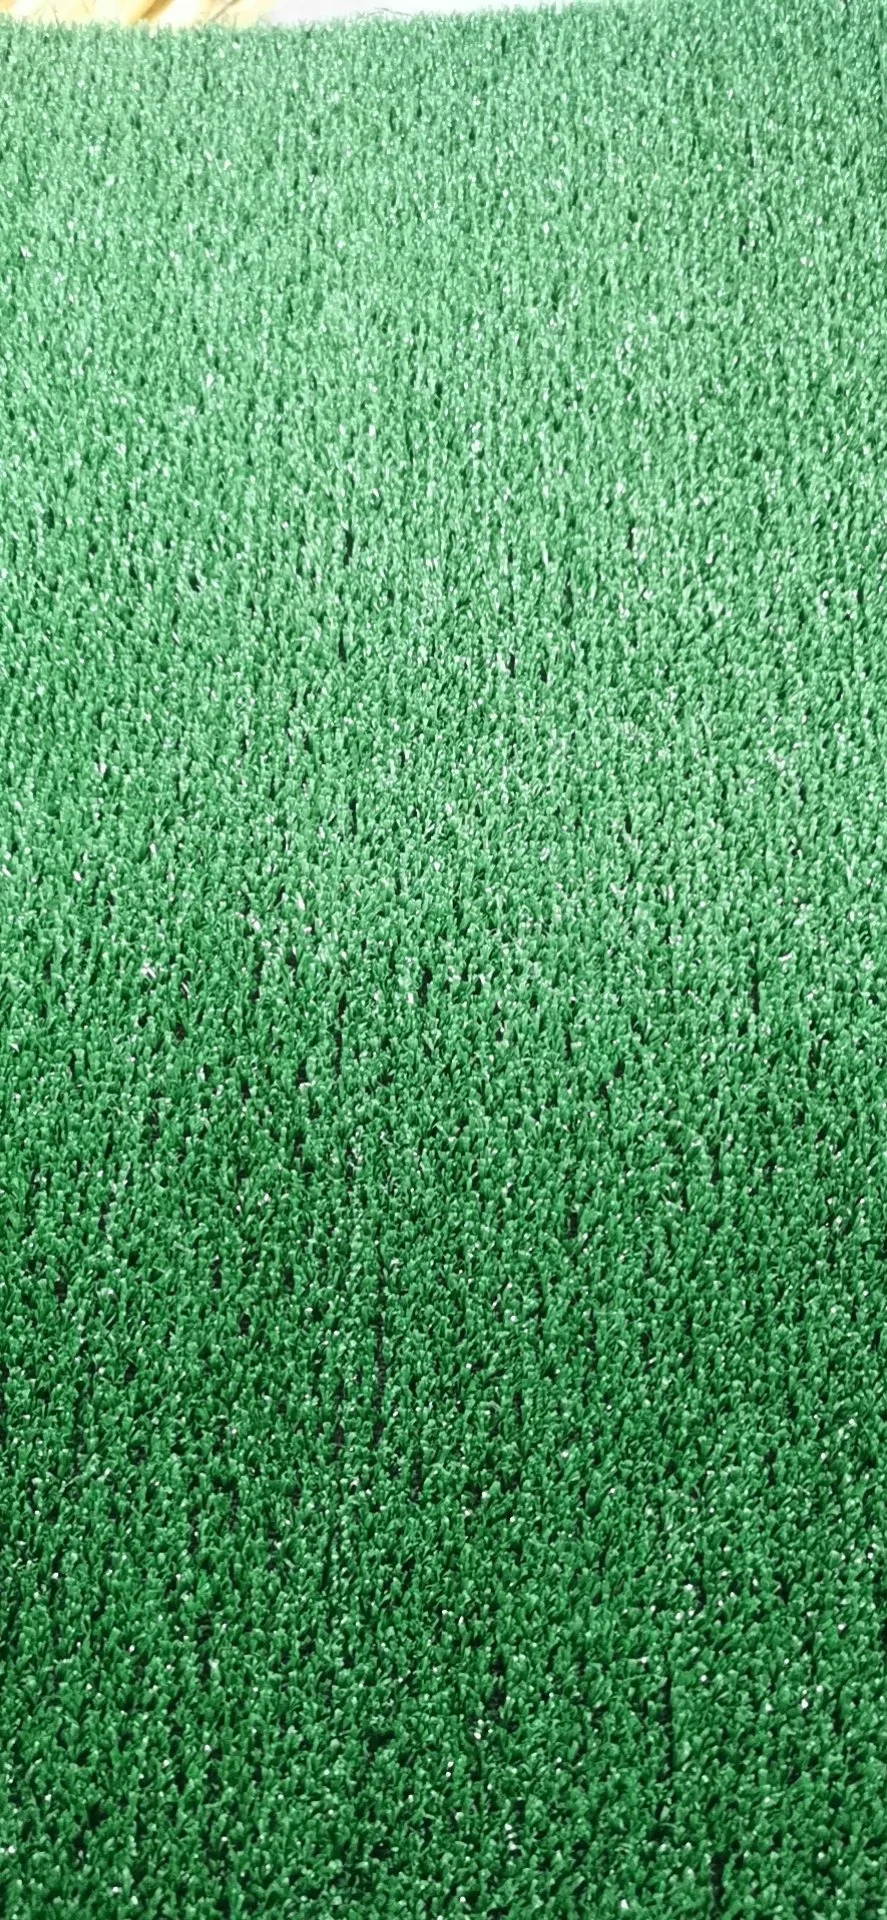 Garden and Landscape Grass Football Grass Plastic Fake Synthetic Grass Artificial Turf